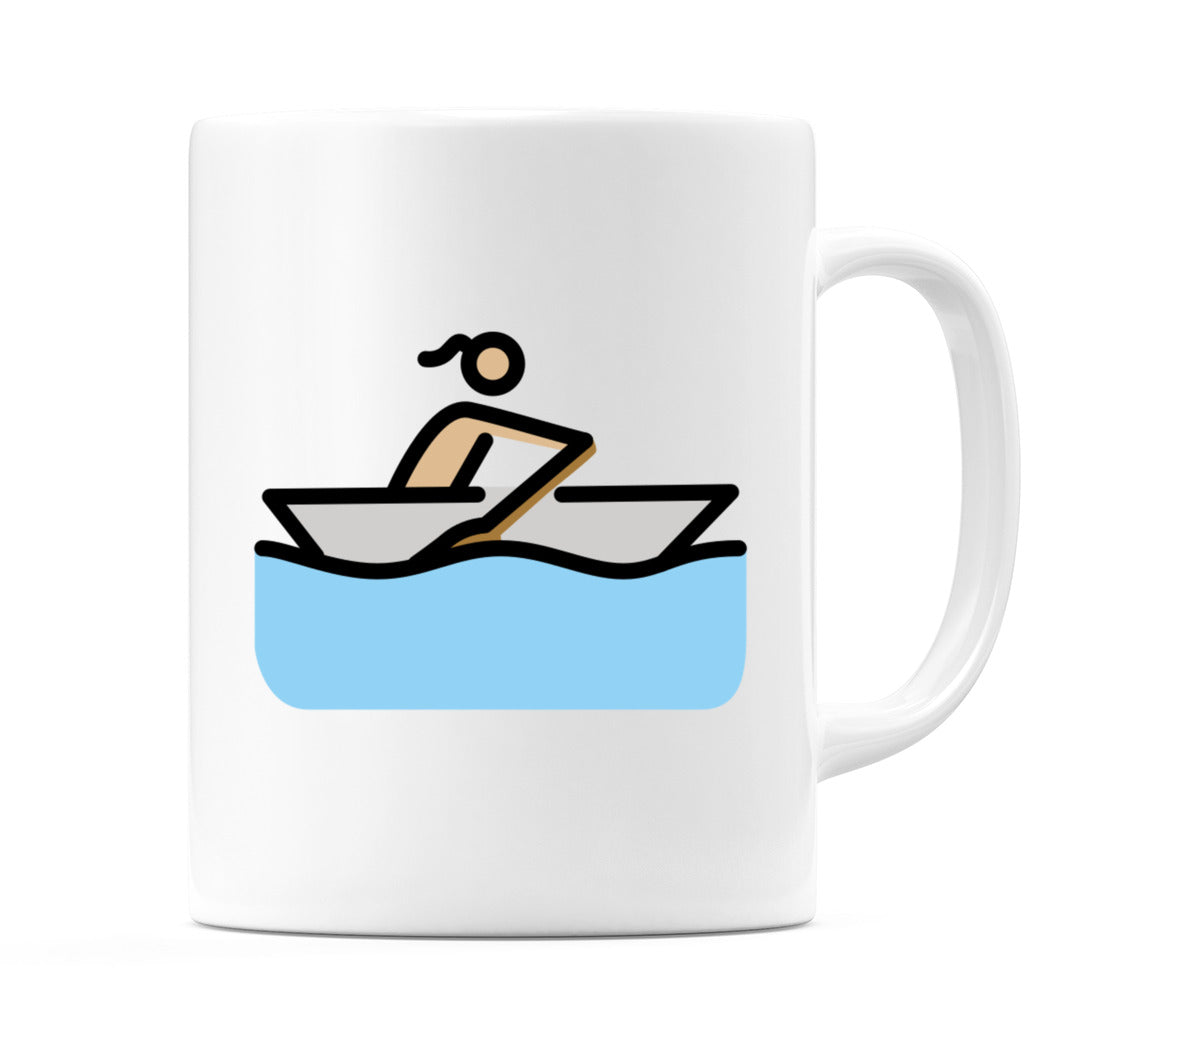 Female Rowing Boat: Medium-Light Skin Tone Emoji Mug